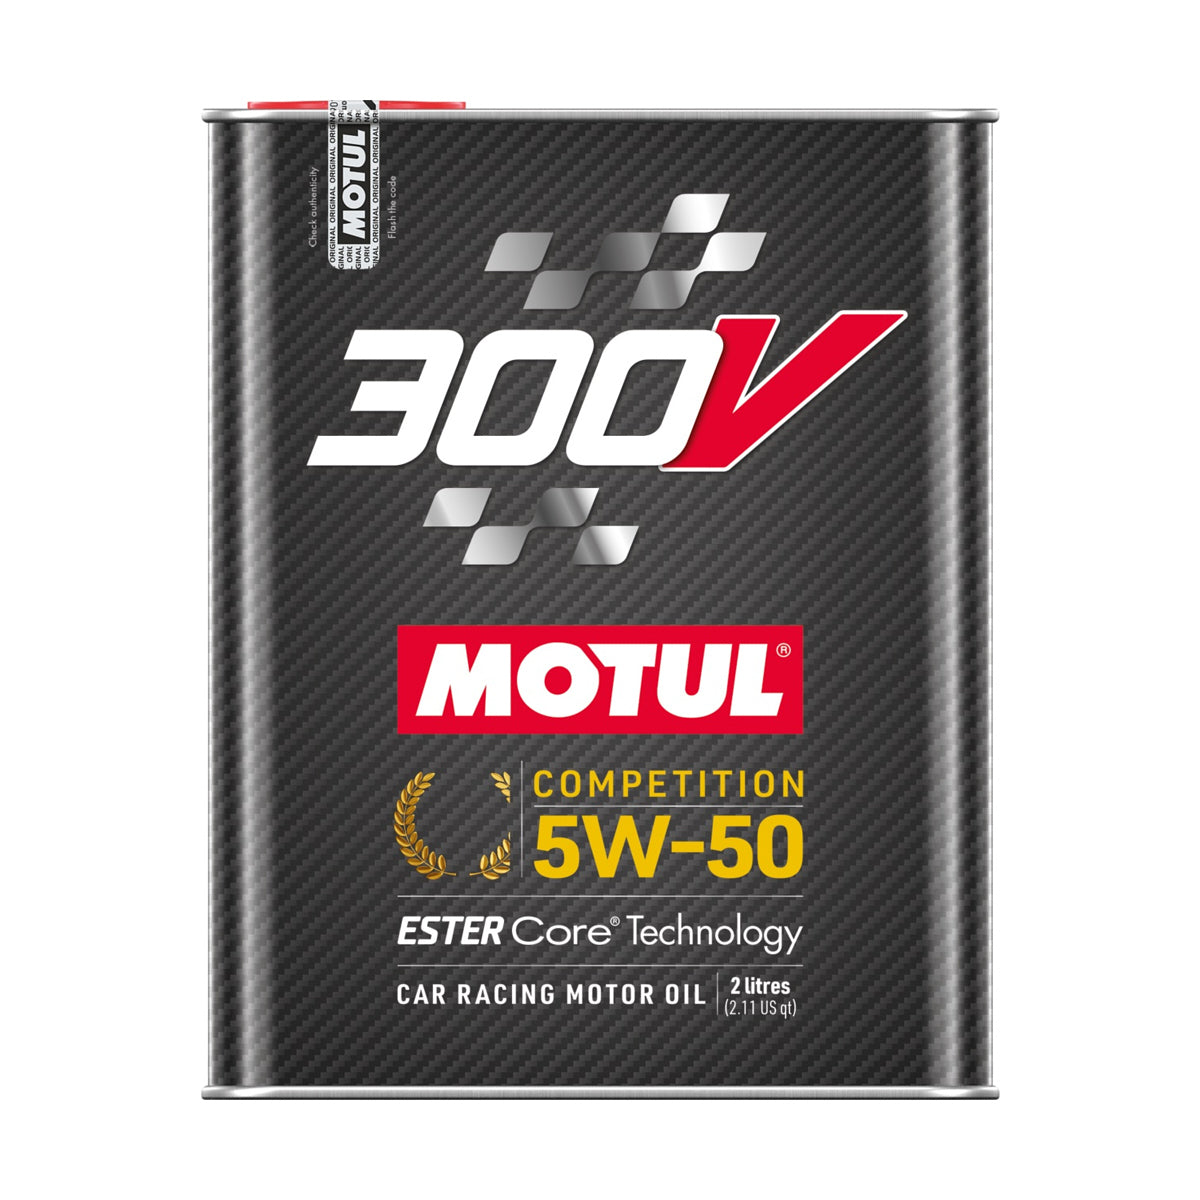 Motul 300V Competition Oil 5w50 2 Liter MTL110859